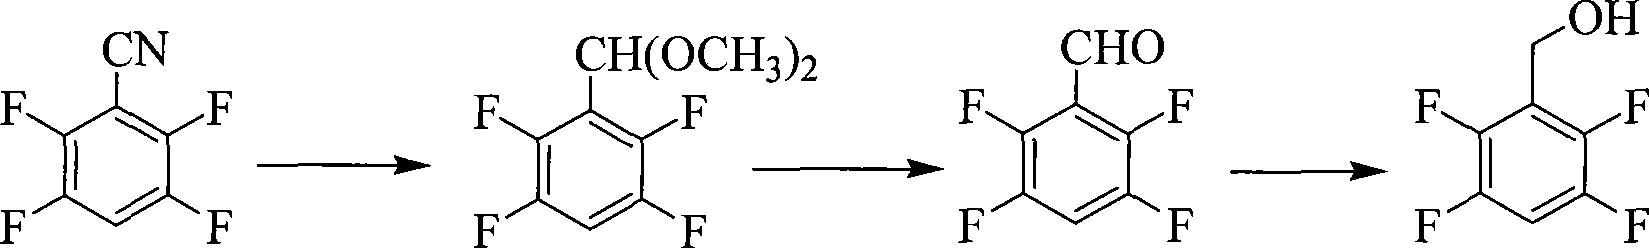 Preparation of 2,3,5,6-tetrafluorobenzyl alcohol